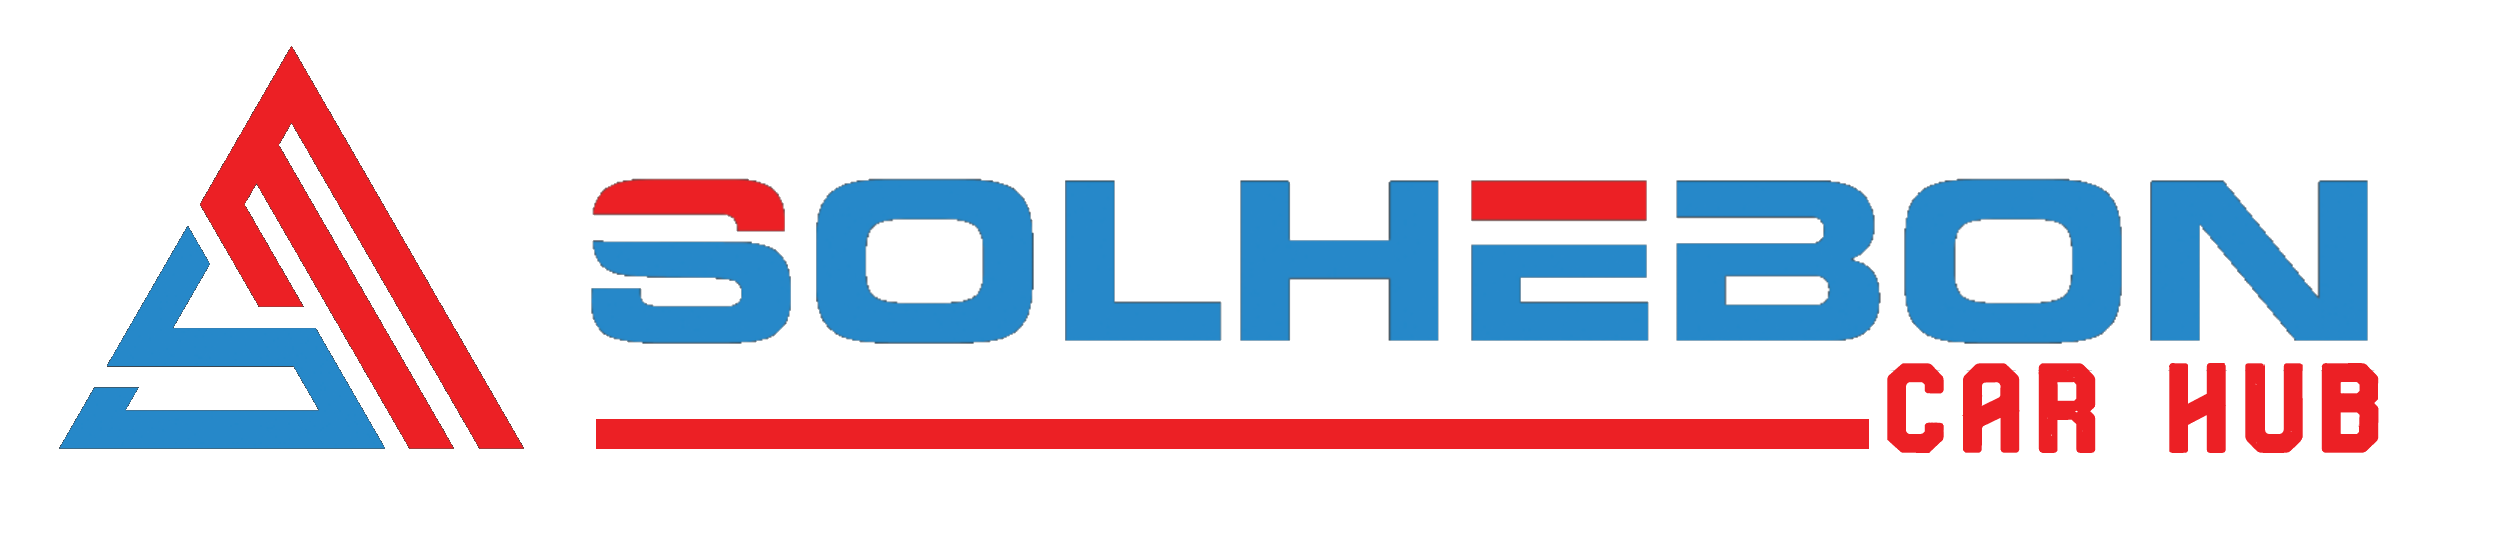 Solhebon Car Hub logo